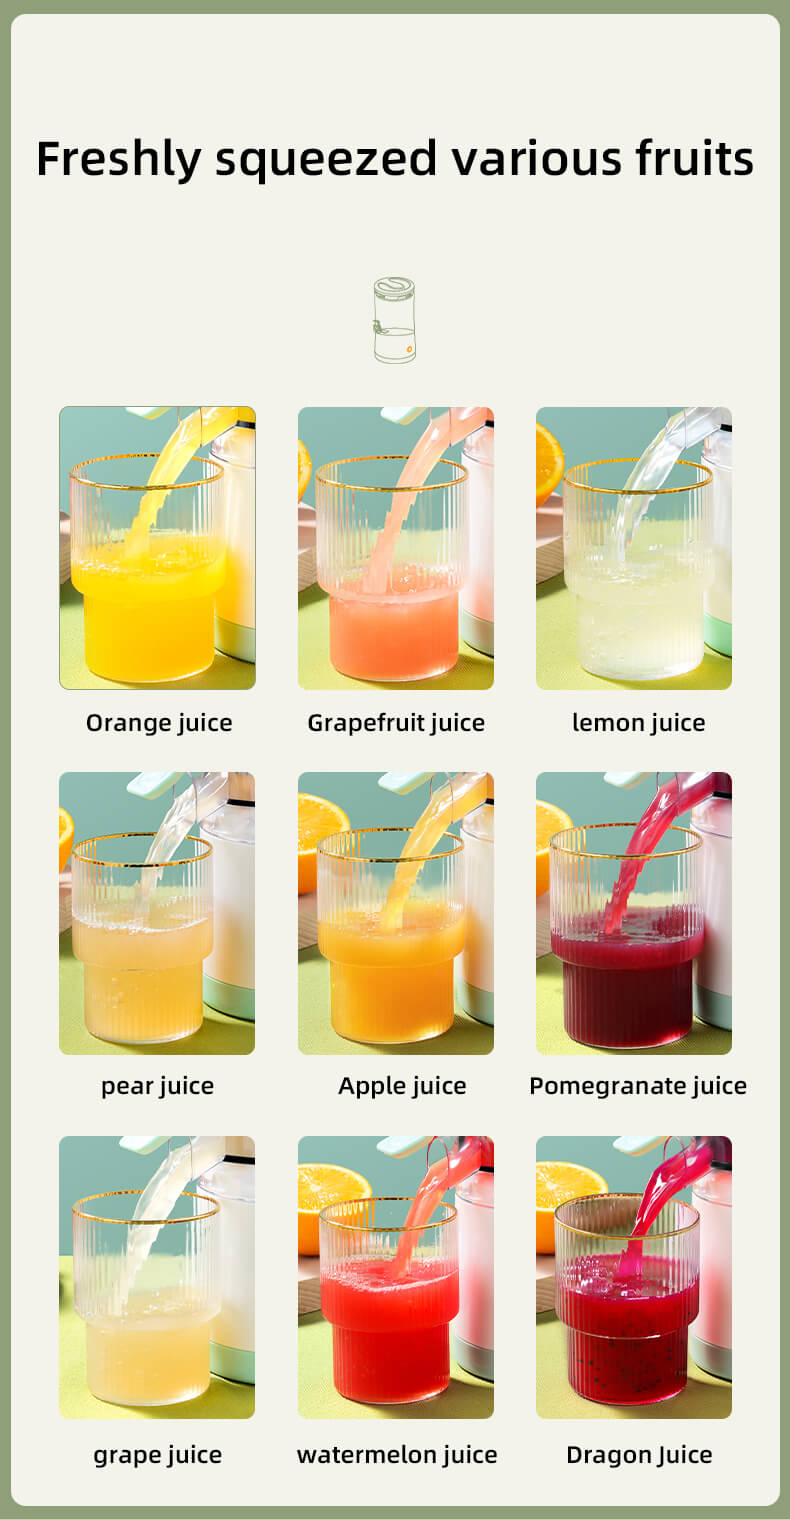 FruitFiesta Portable Citrus Fresh Juicer